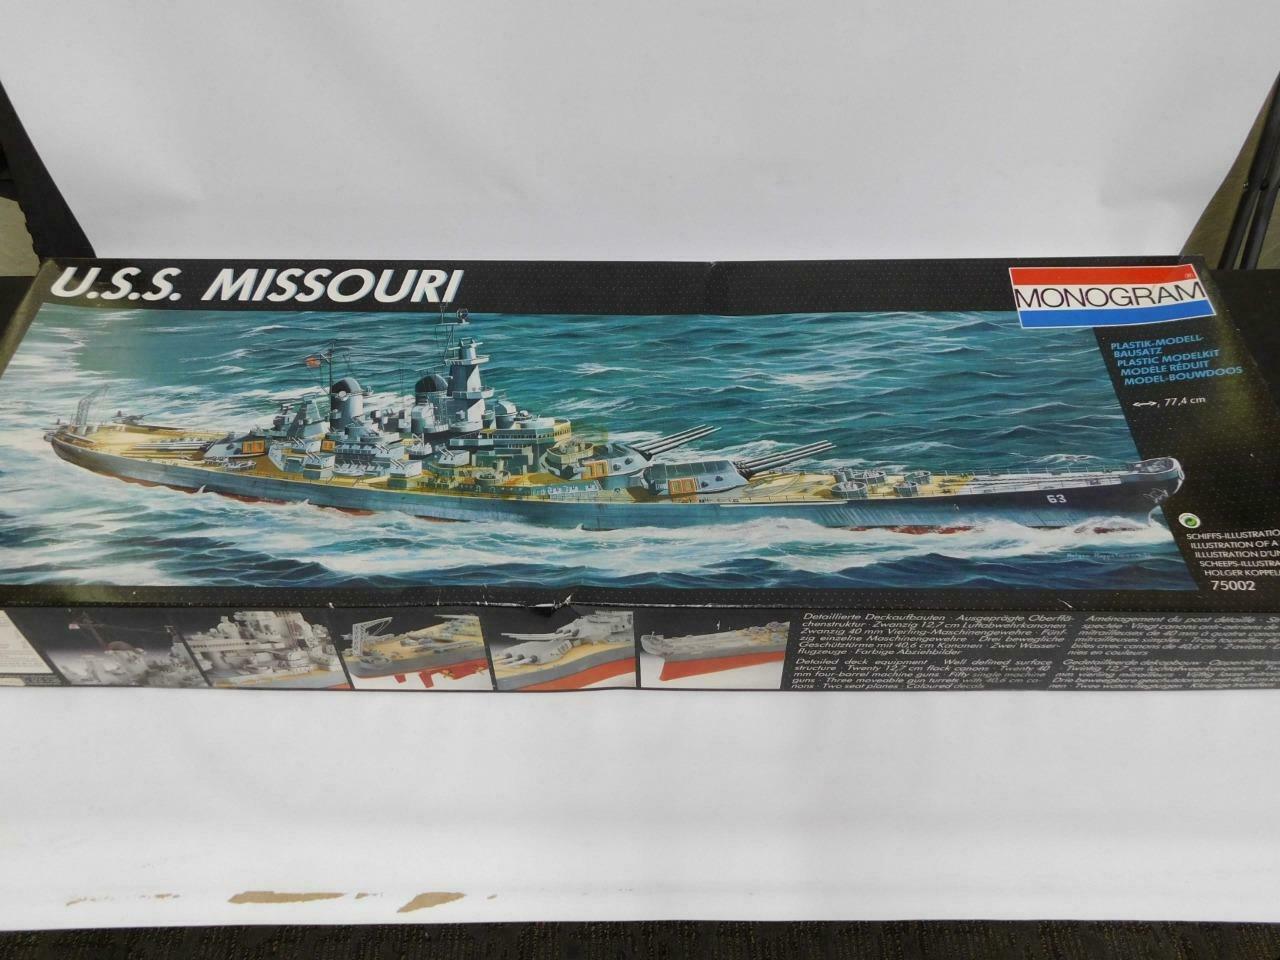 1/350 Monogram Uss Missouri Wwii Battleship Plastic Model Kit Complete 75002